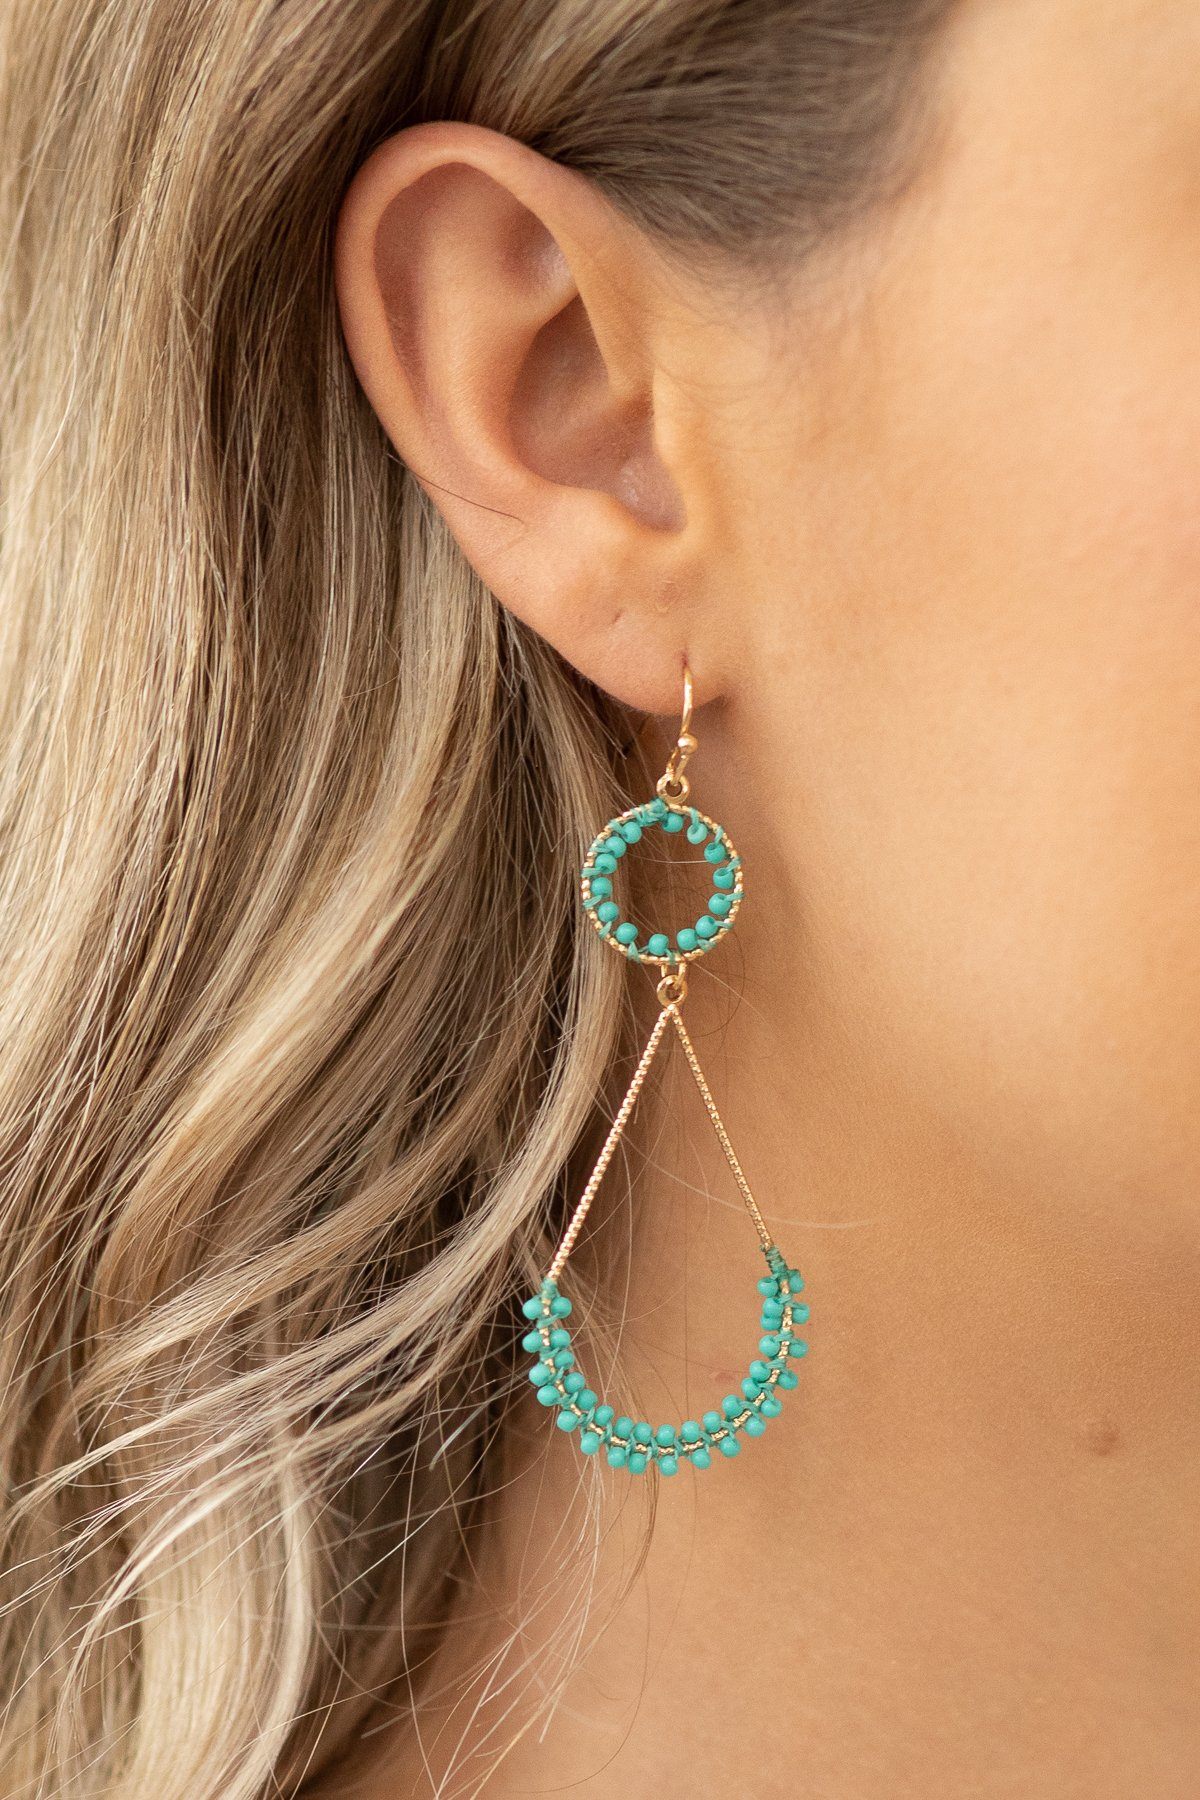 Turquoise Teardrop Dangle Earrings - Filly Flair